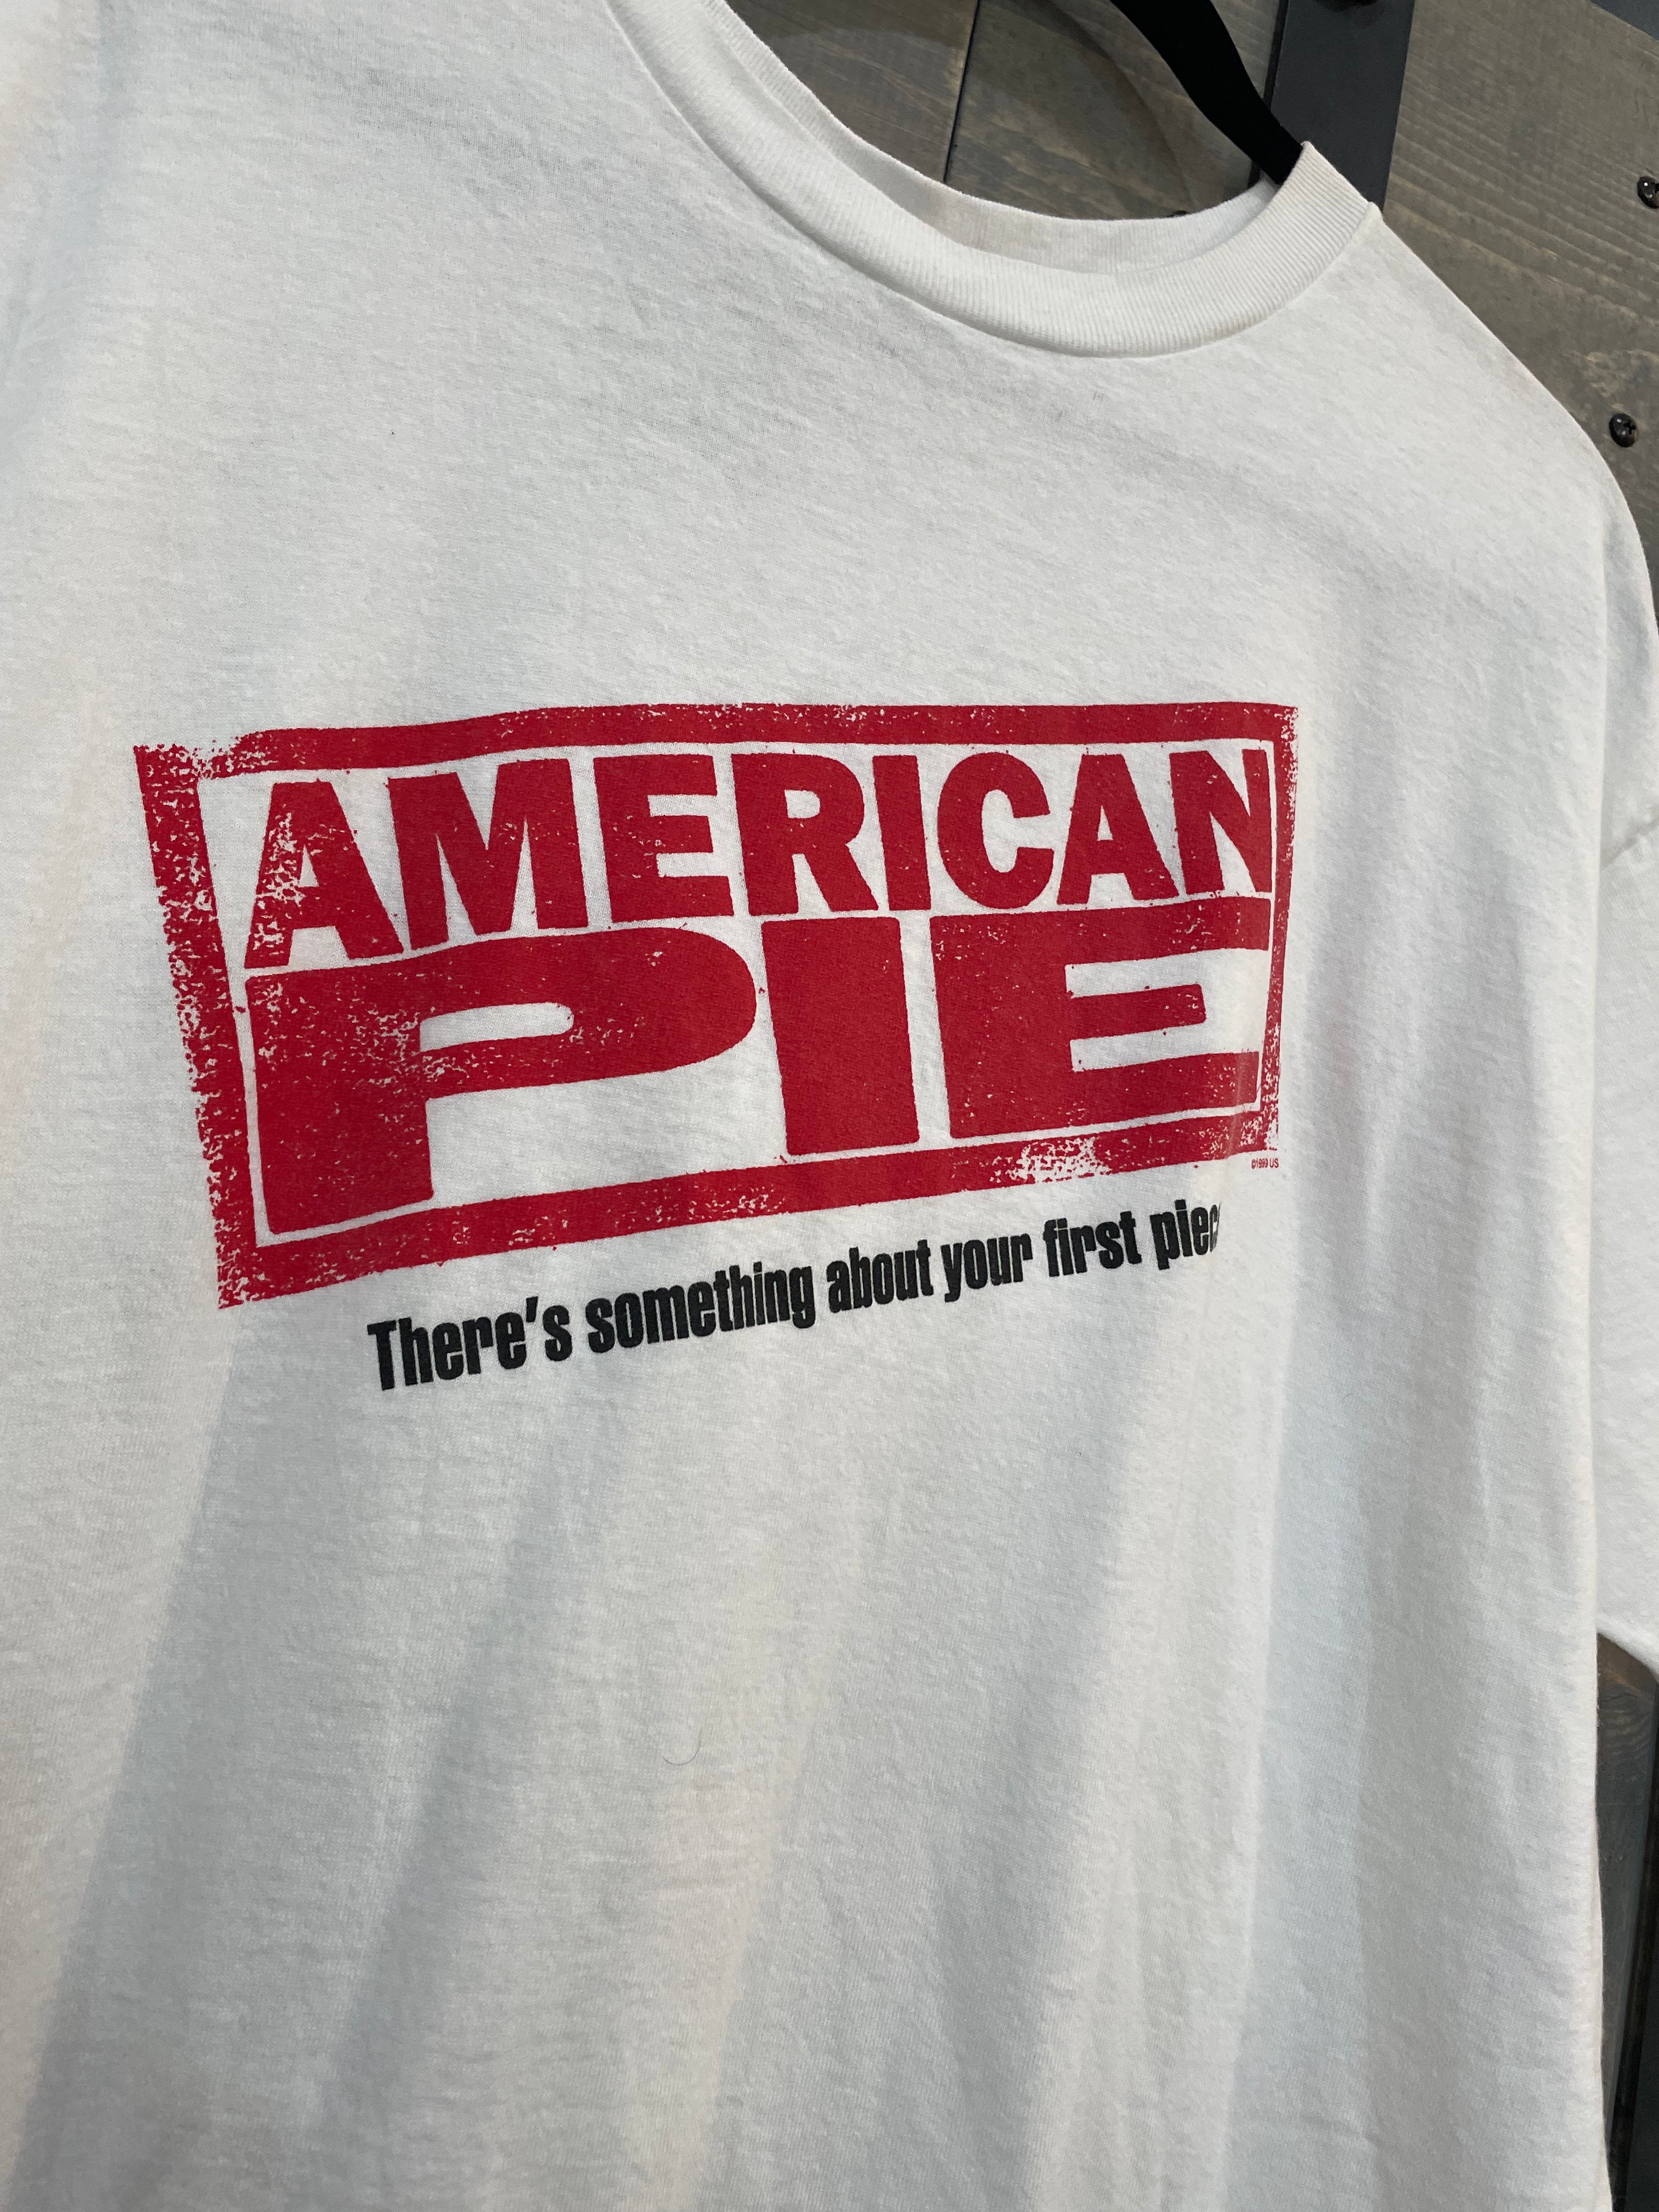 ‘99 American Pie Promo